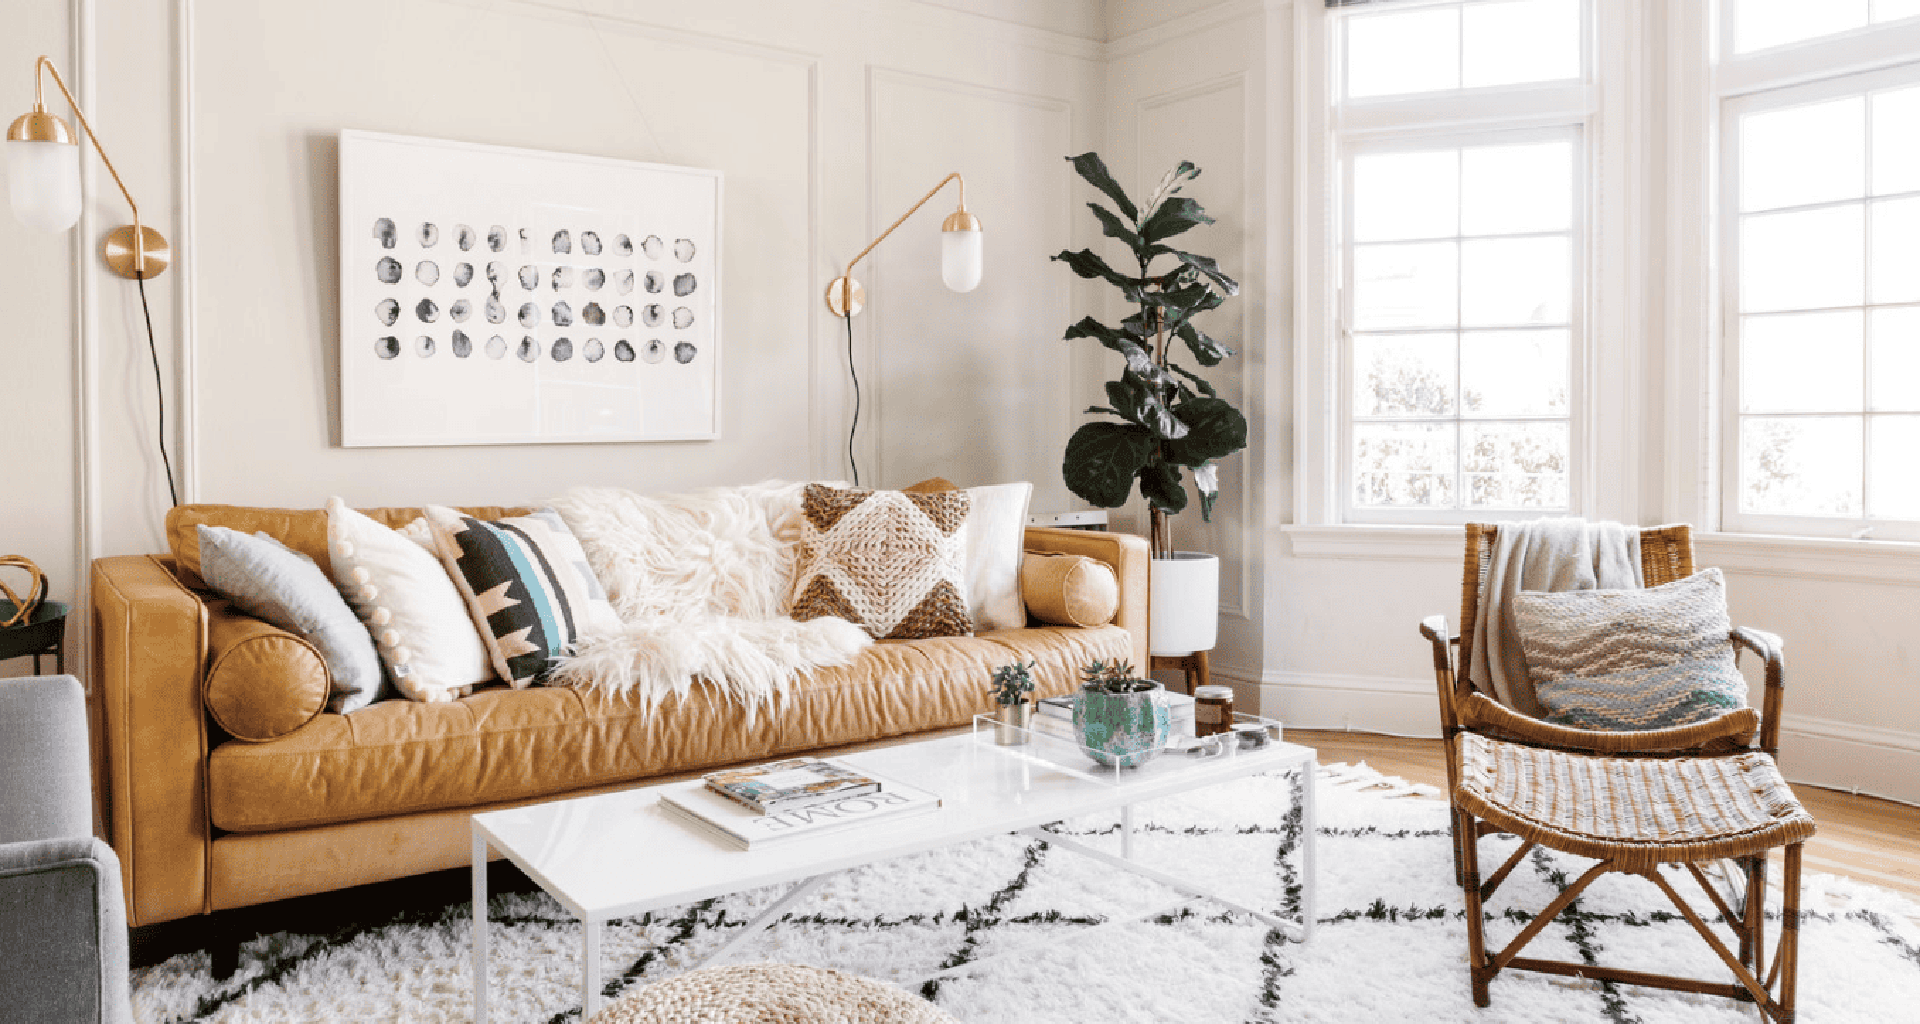 5 Furniture Ideas for a Scandinavian Inspired Home